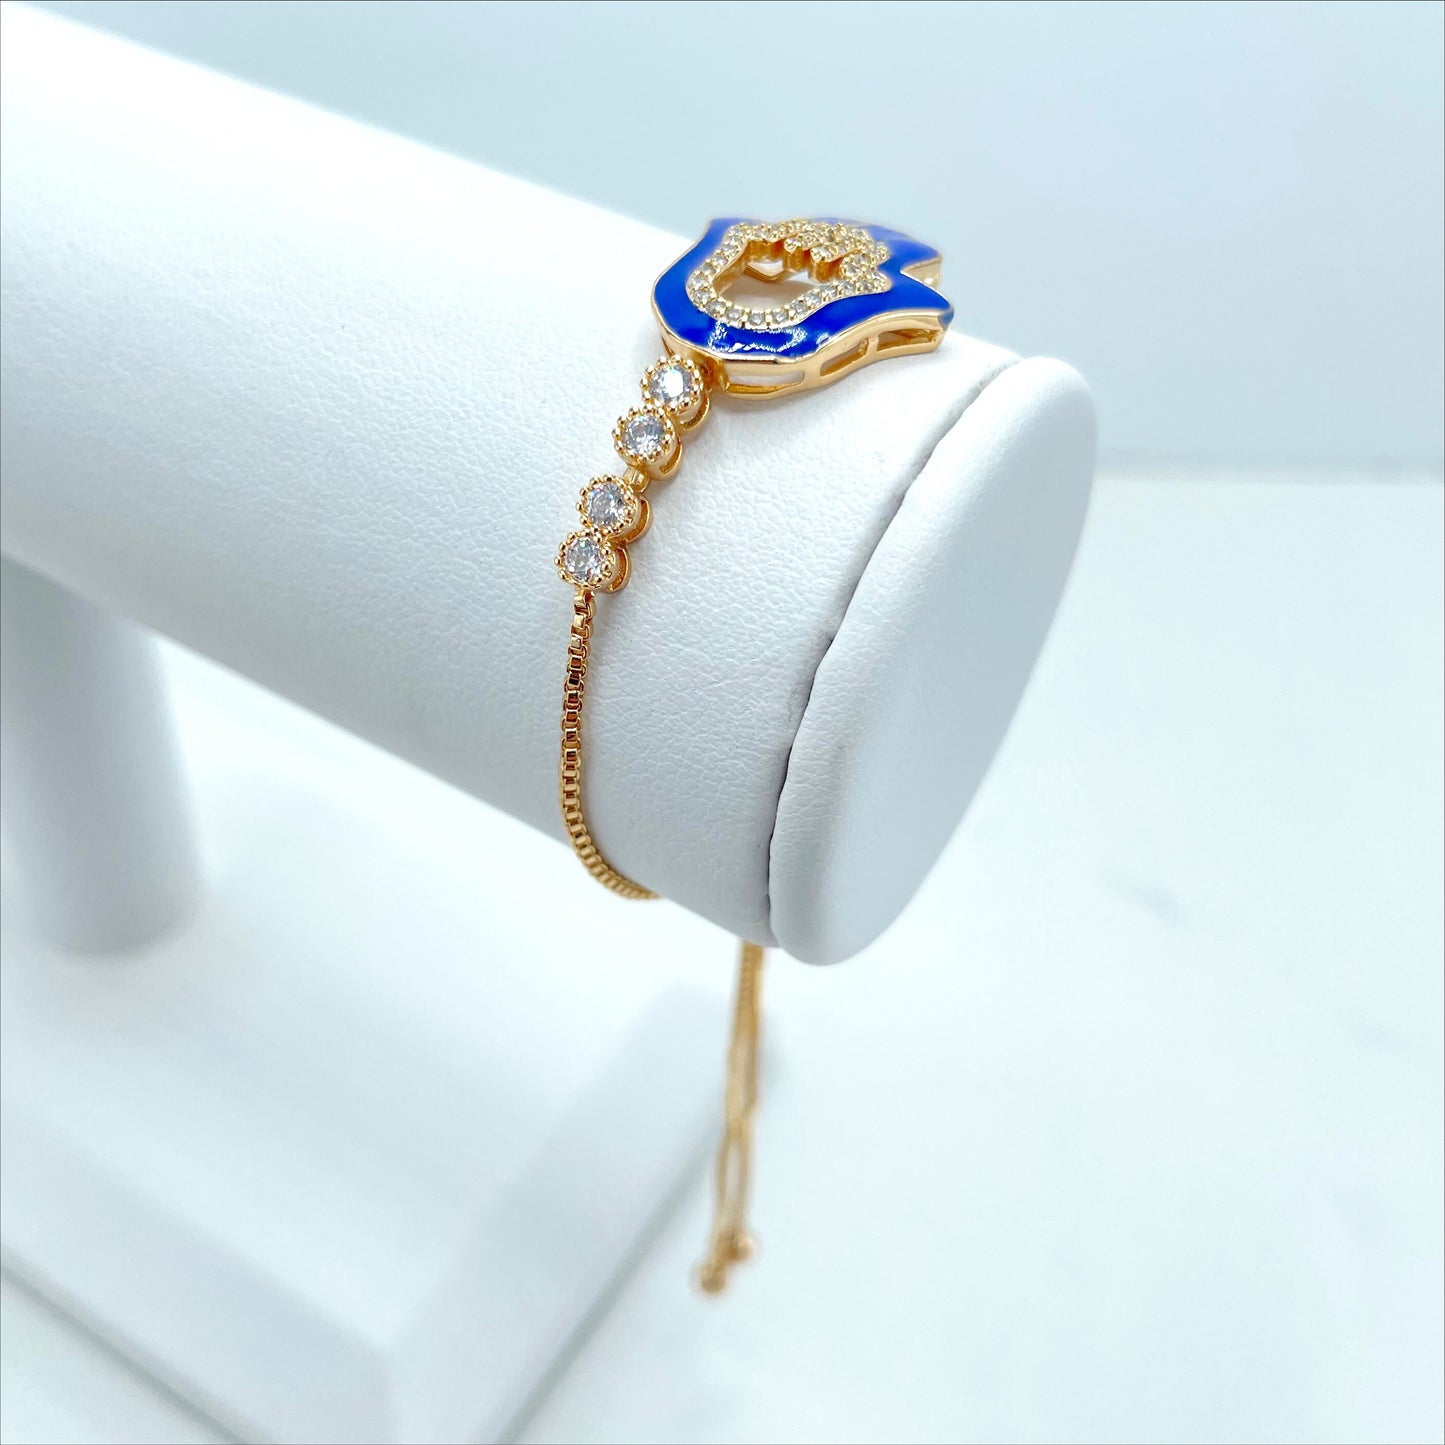 18k Gold Filled 1mm Box Chain, Blue Enamel & Cubic Zirconia Hamsa Hand Charm, Adjustable Bracelet, Wholesale Jewelry Making Supplies